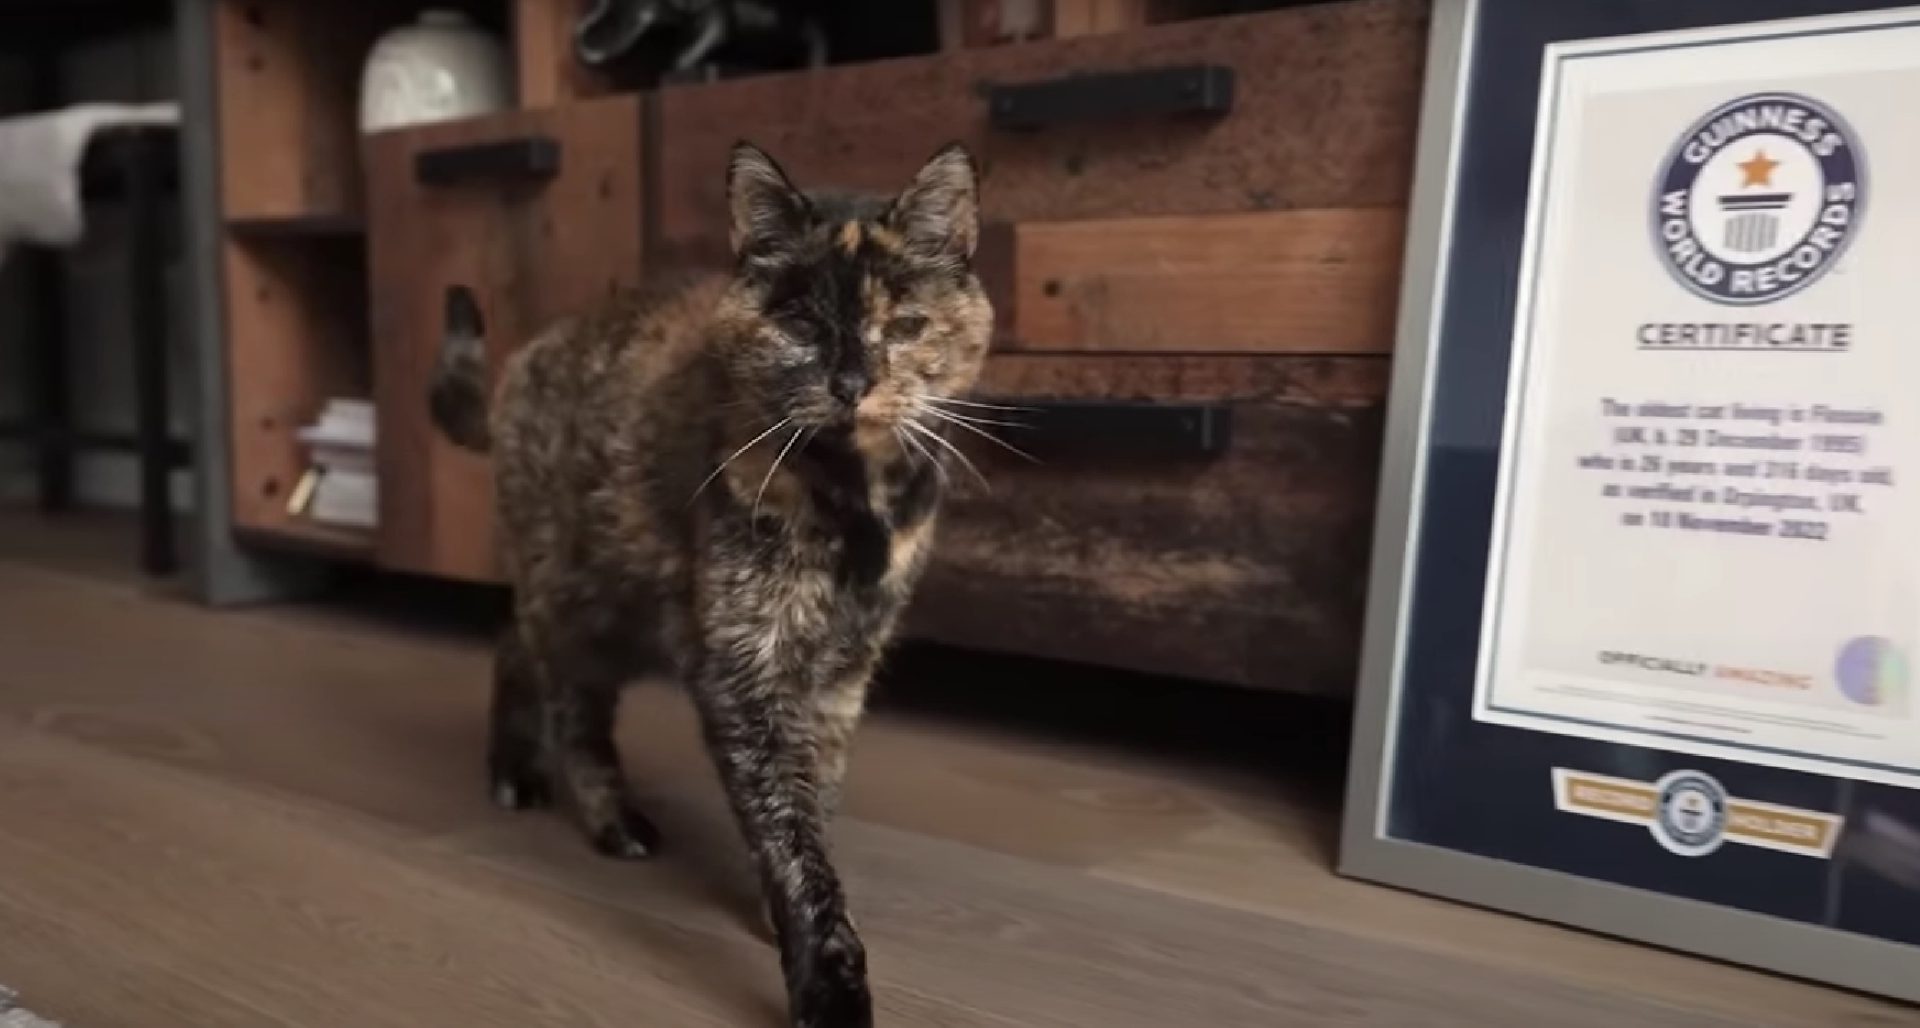 World's oldest living cat